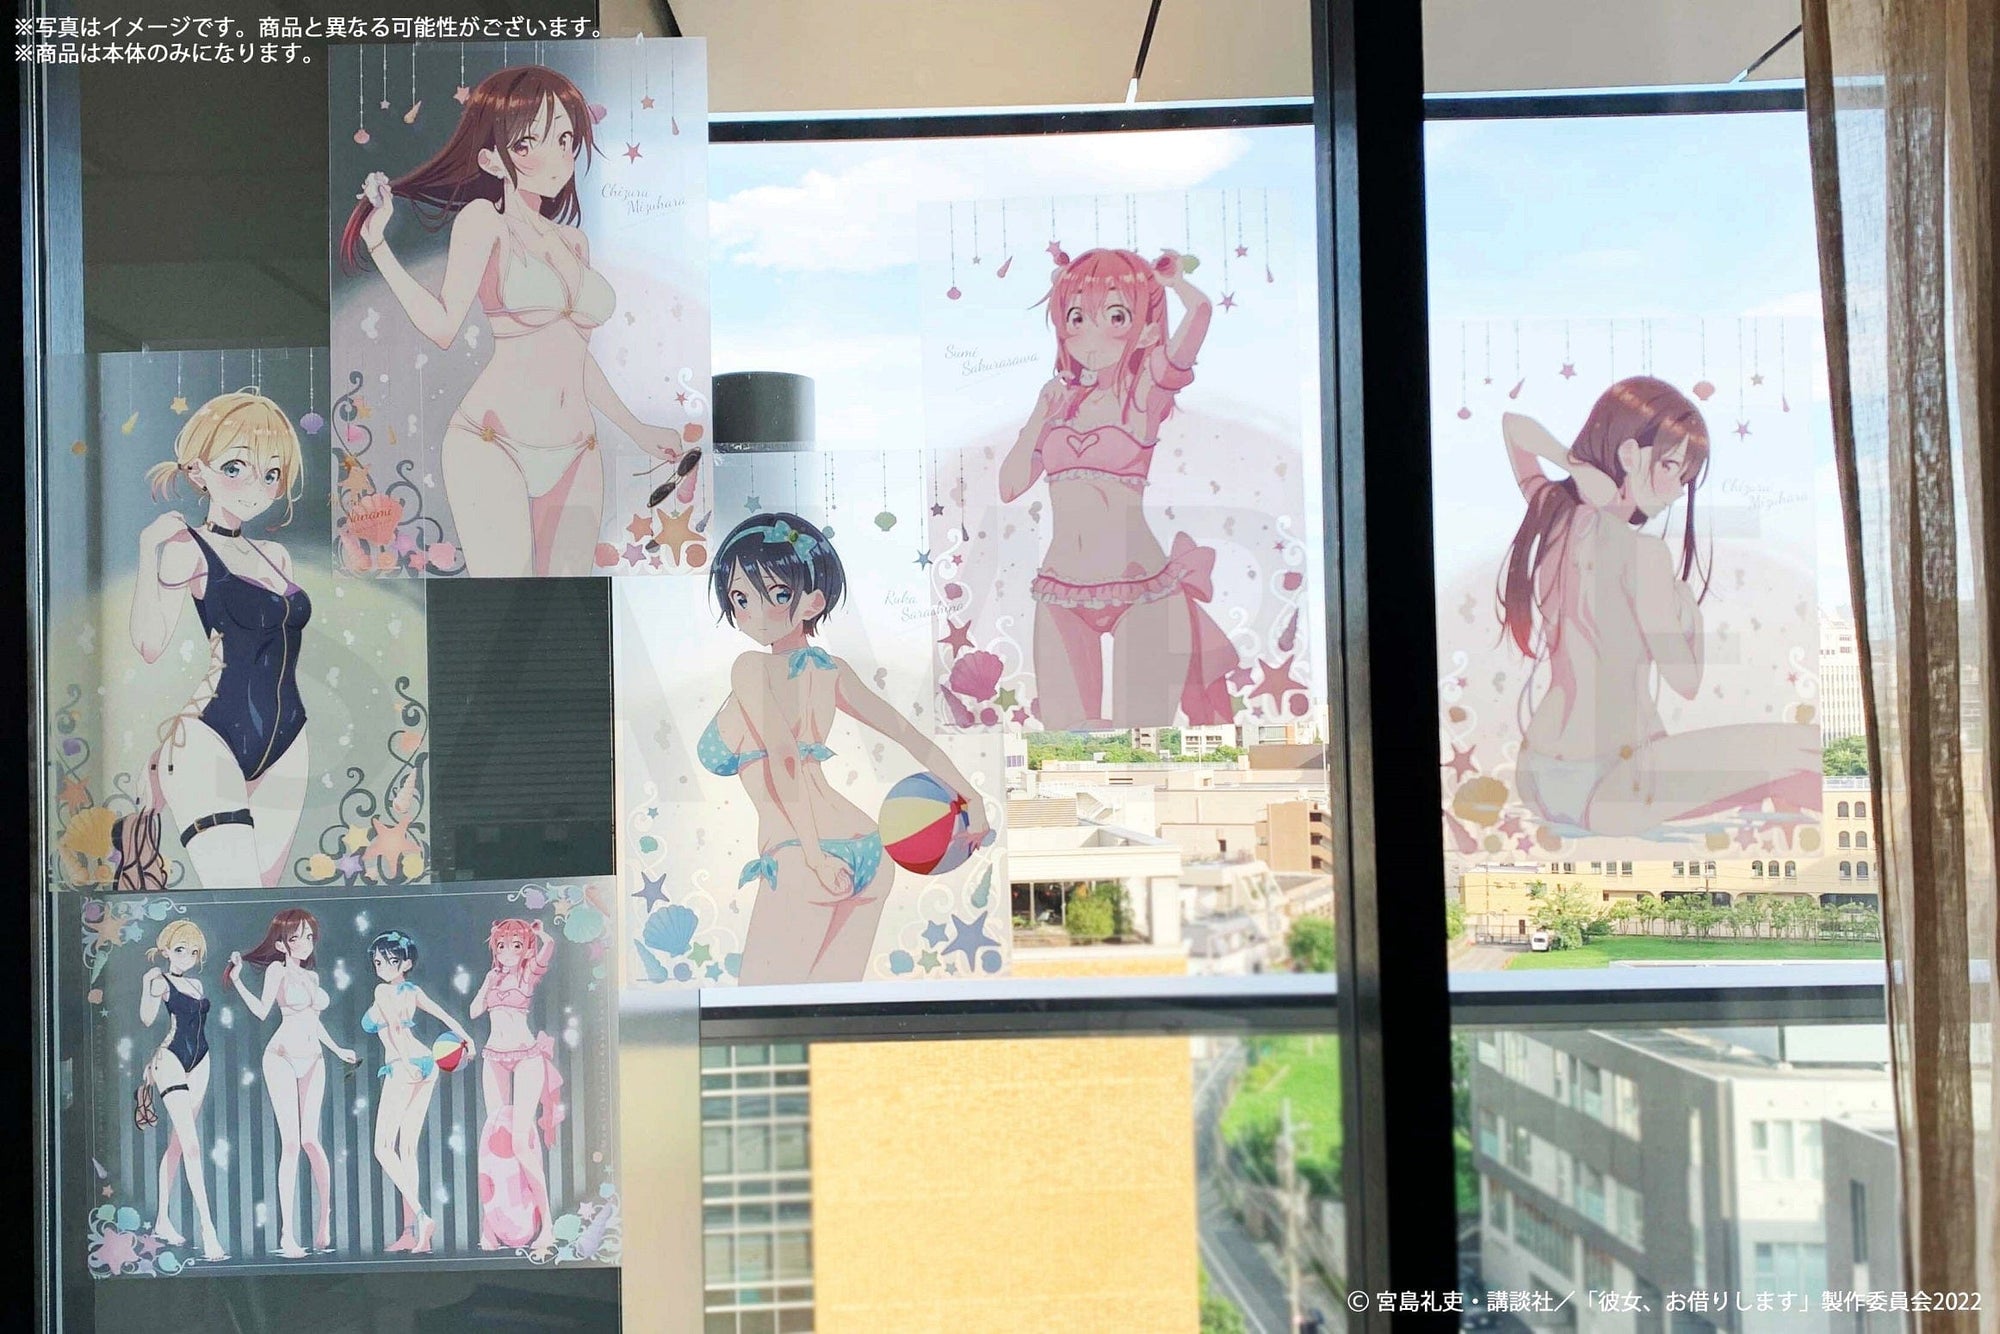 Kadokawa Rent A Girlfriend Swimsuit and Girlfriend A3 Sized Clear Poster